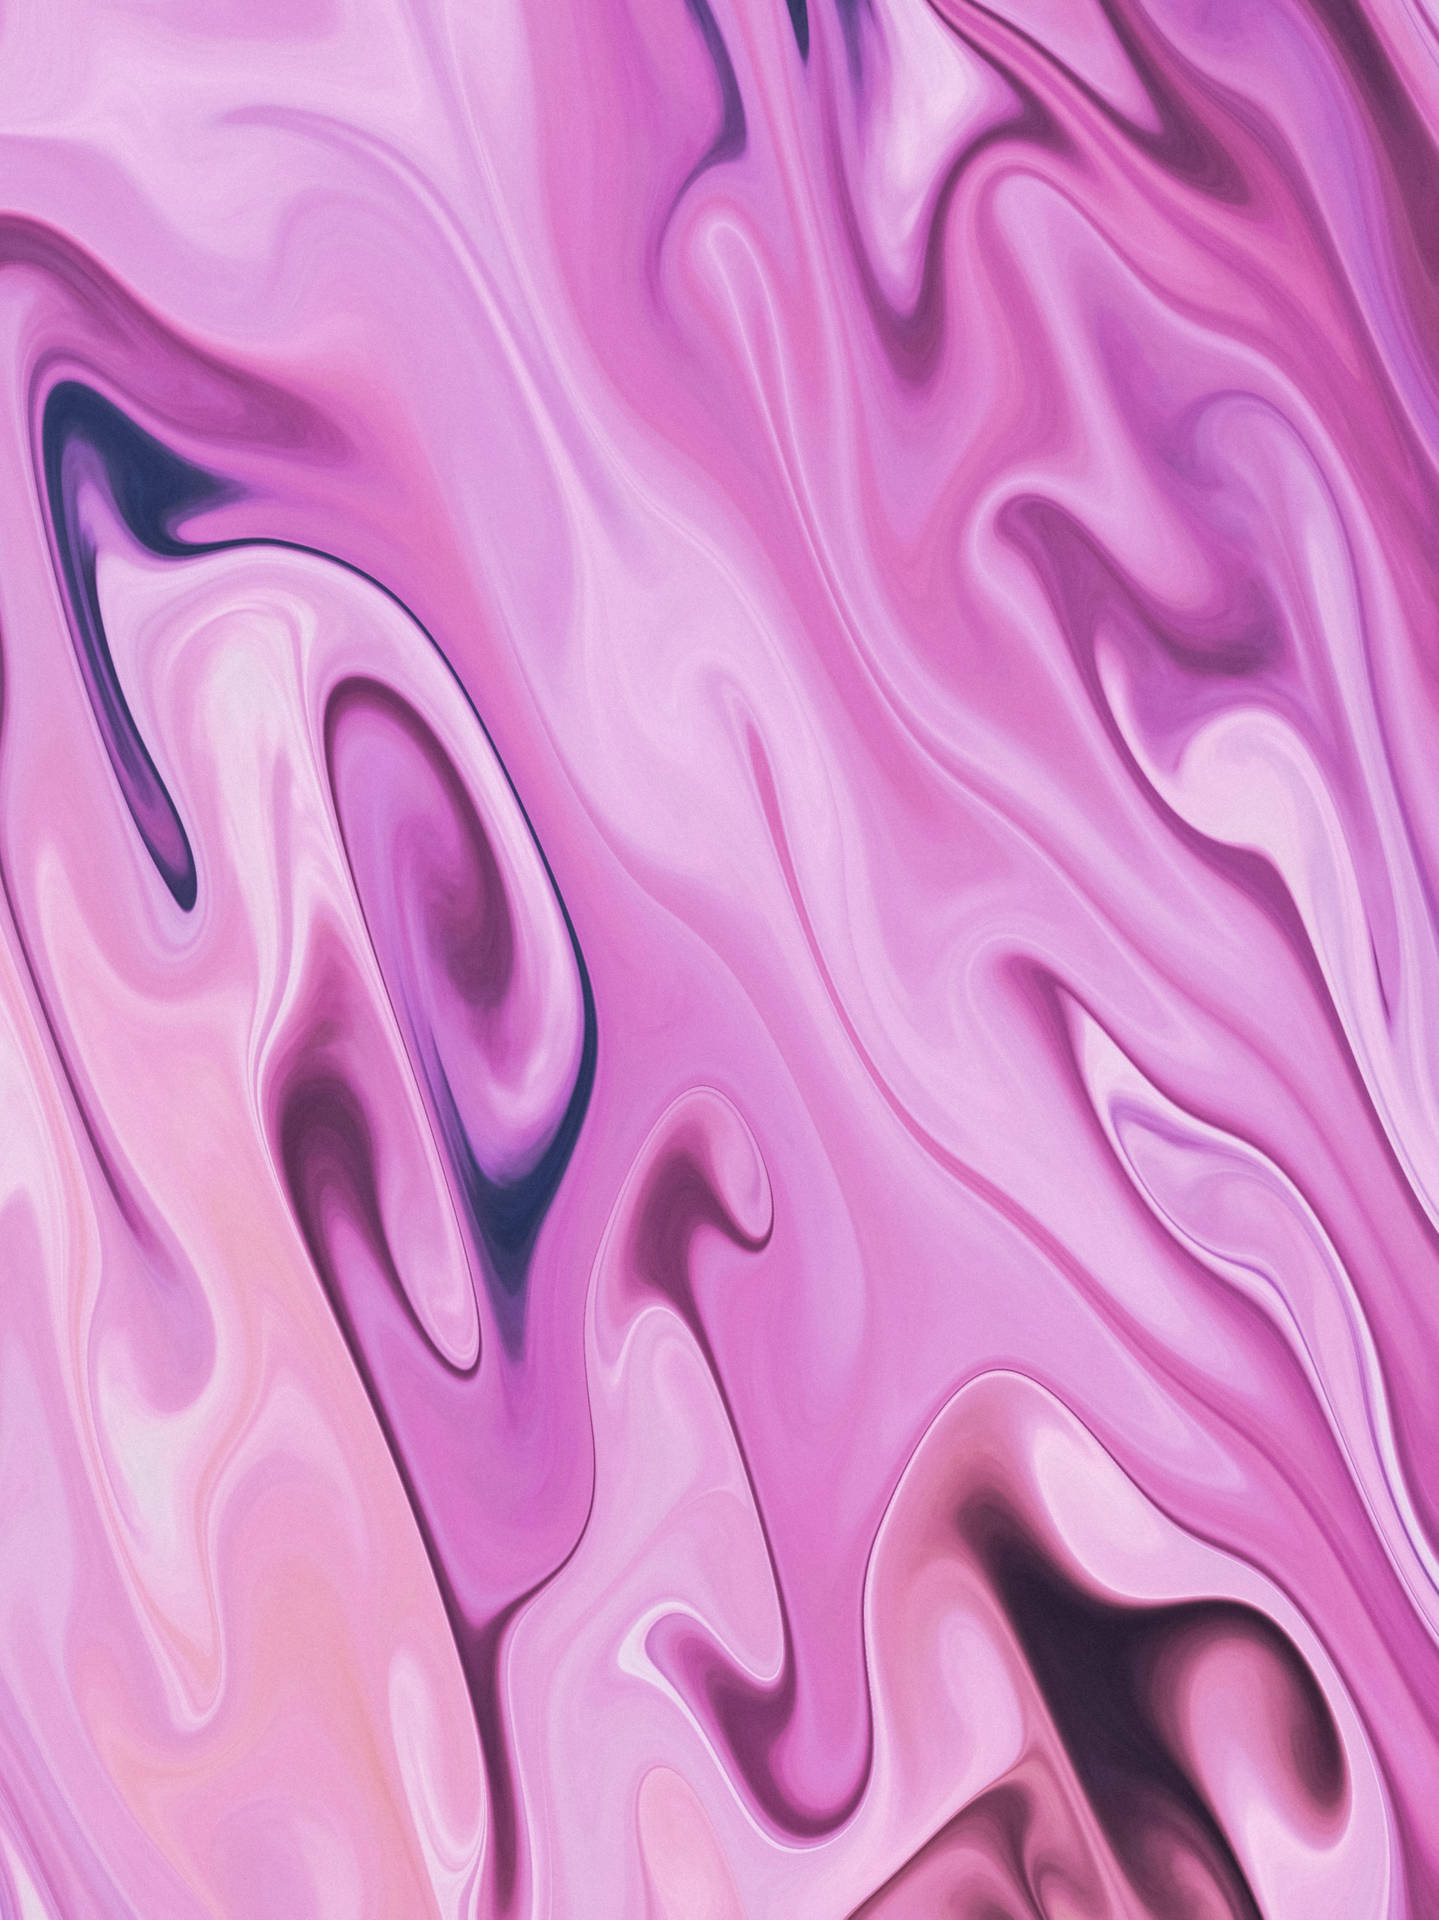 Light Purple Aesthetic Swirls Picture